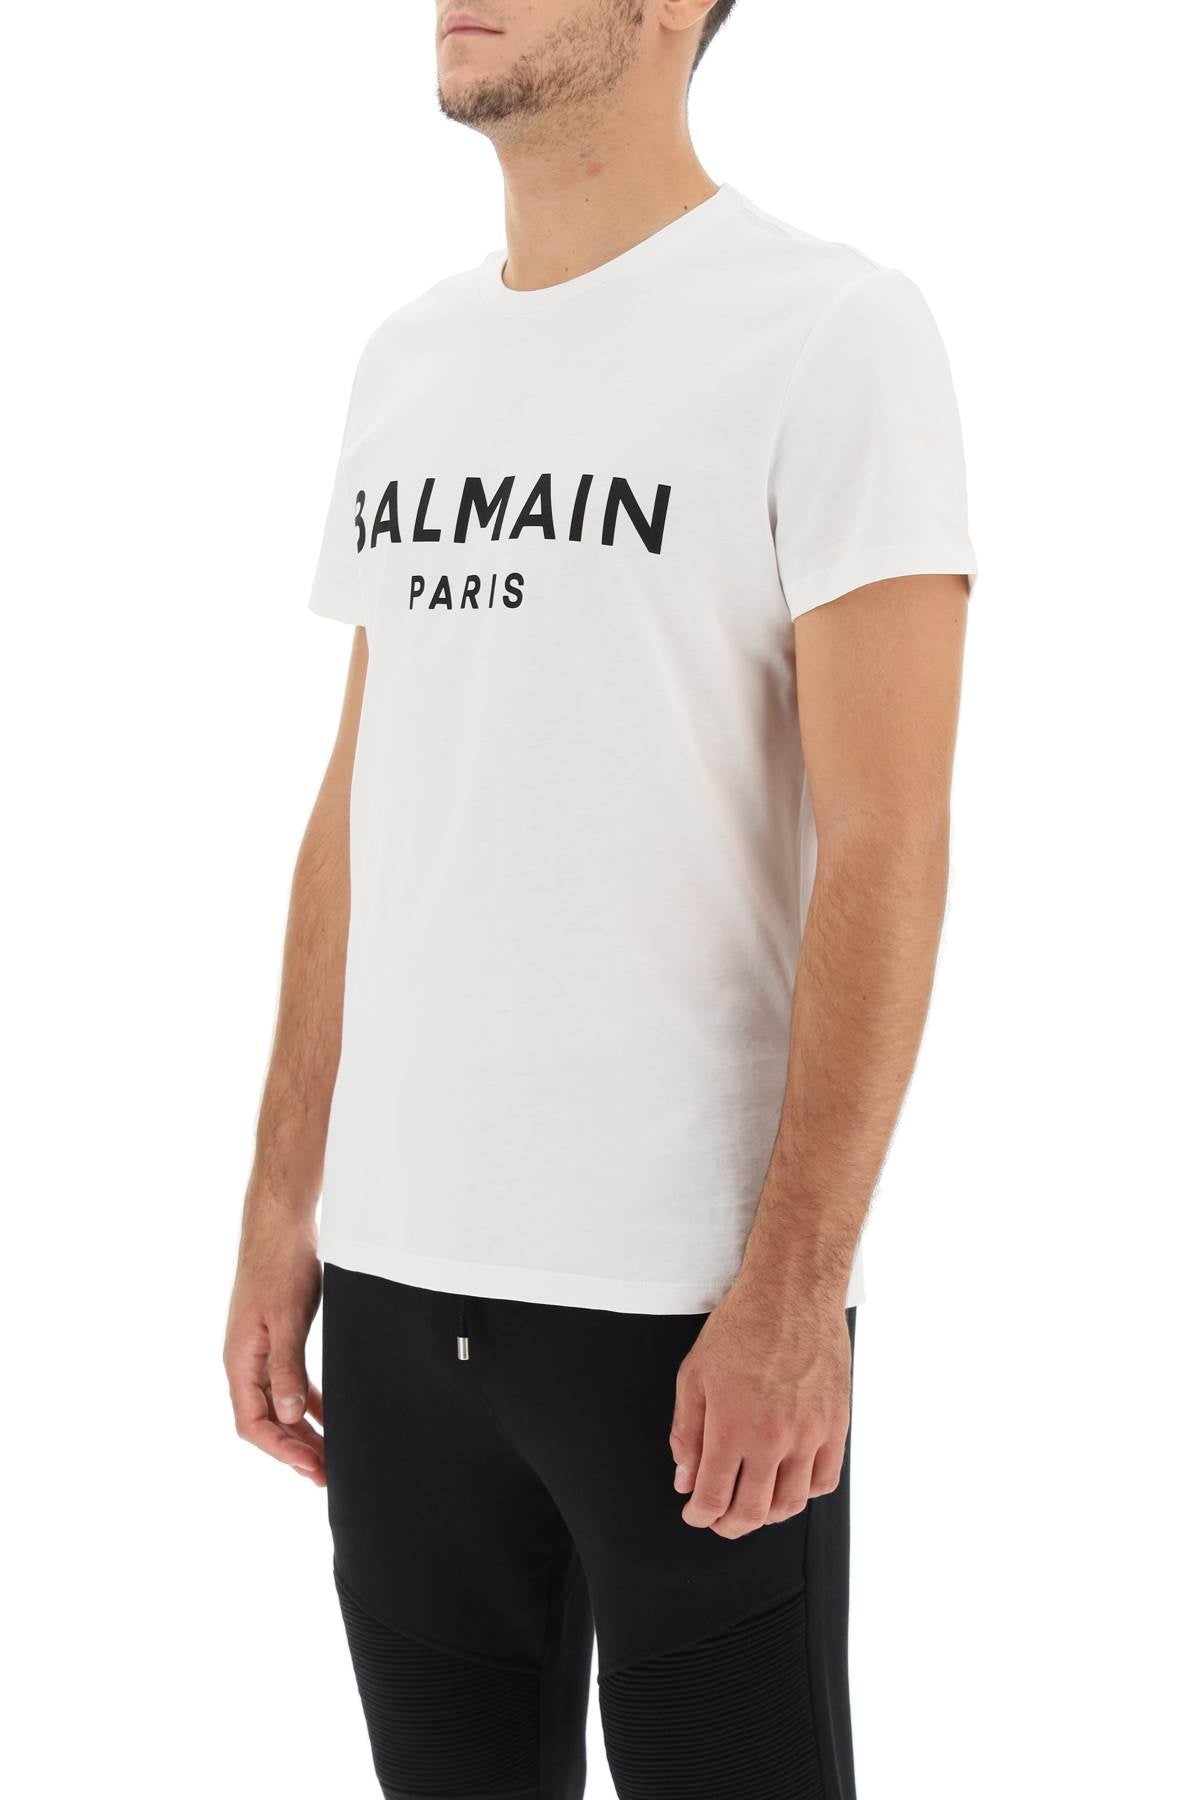 Balmain Logo T-Shirt Men - 4